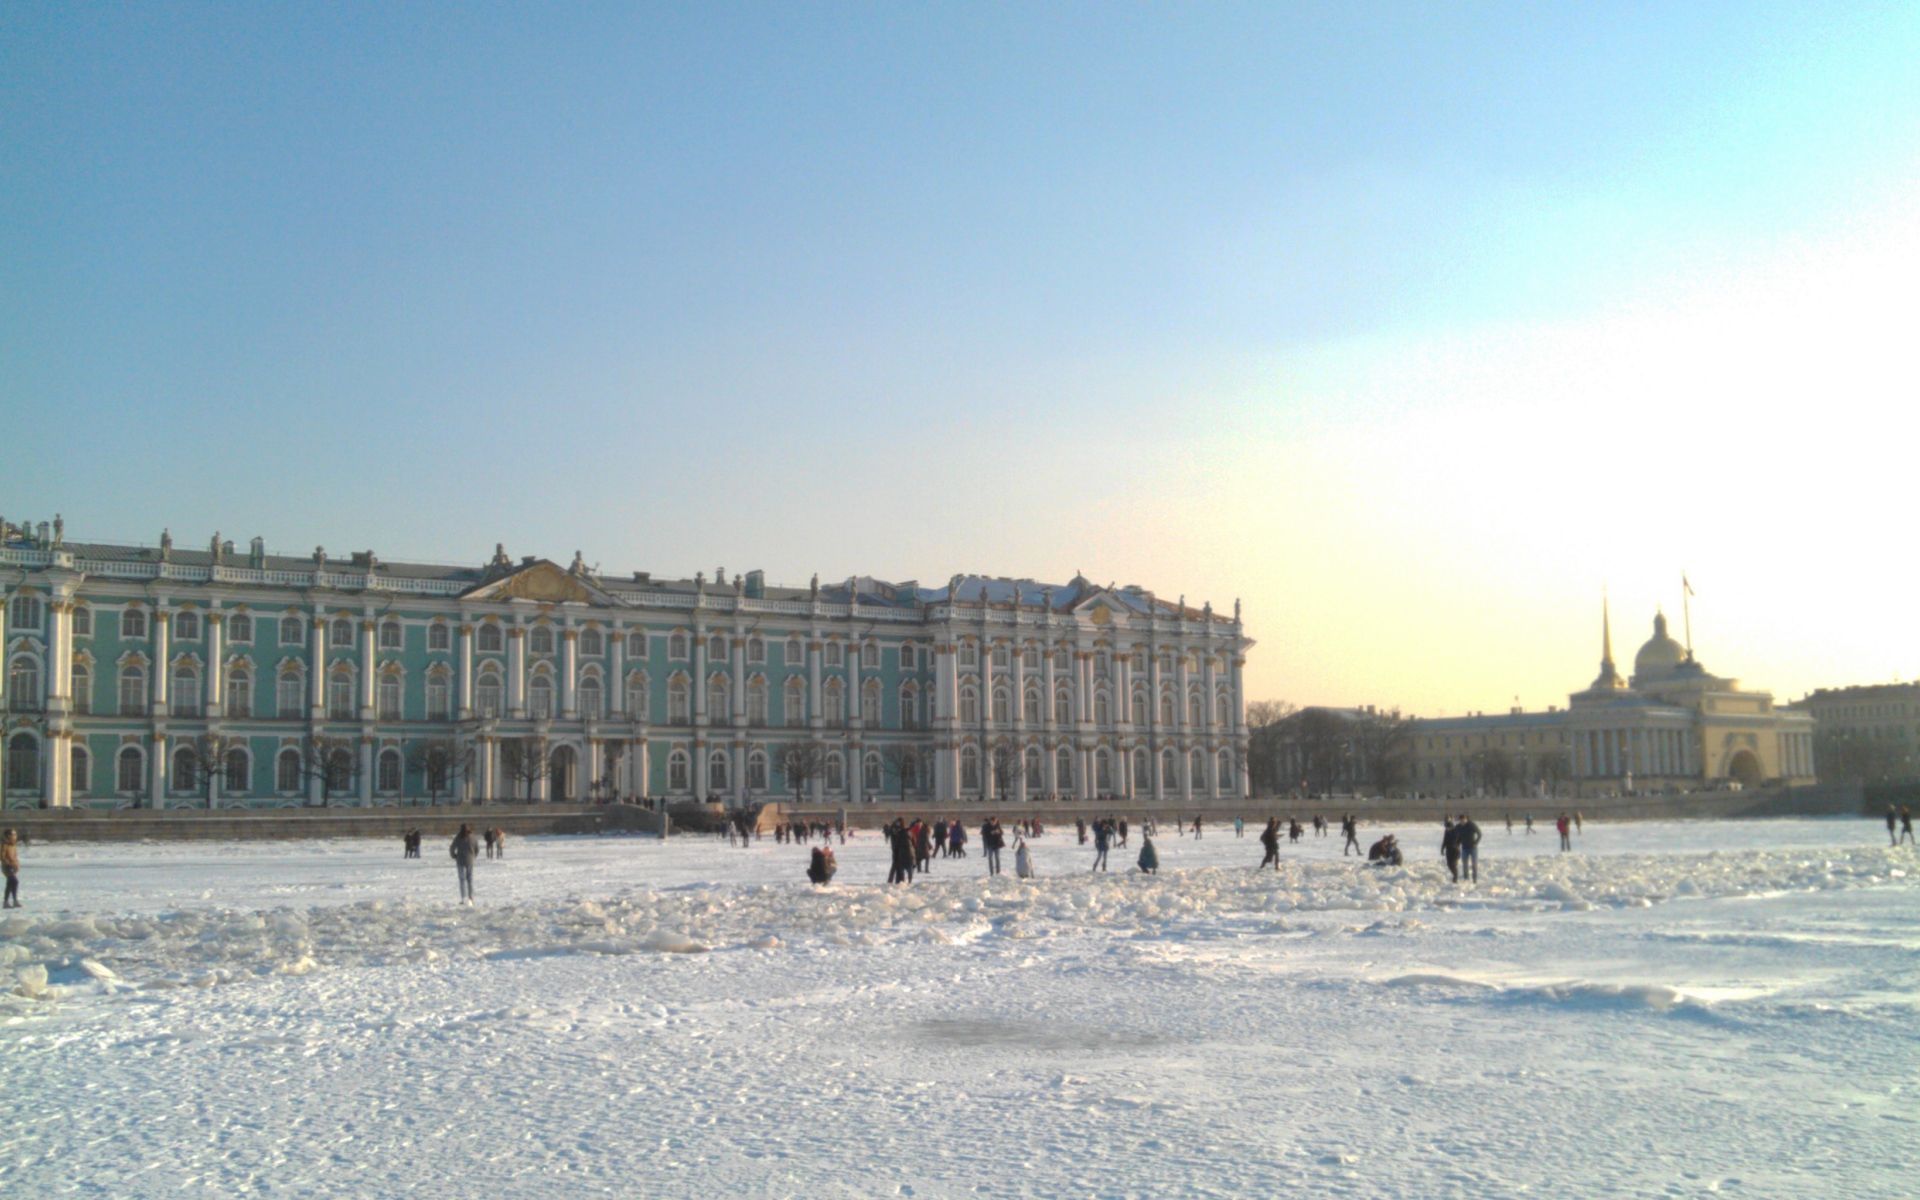 Snow in St. Petersburg around Hermitage